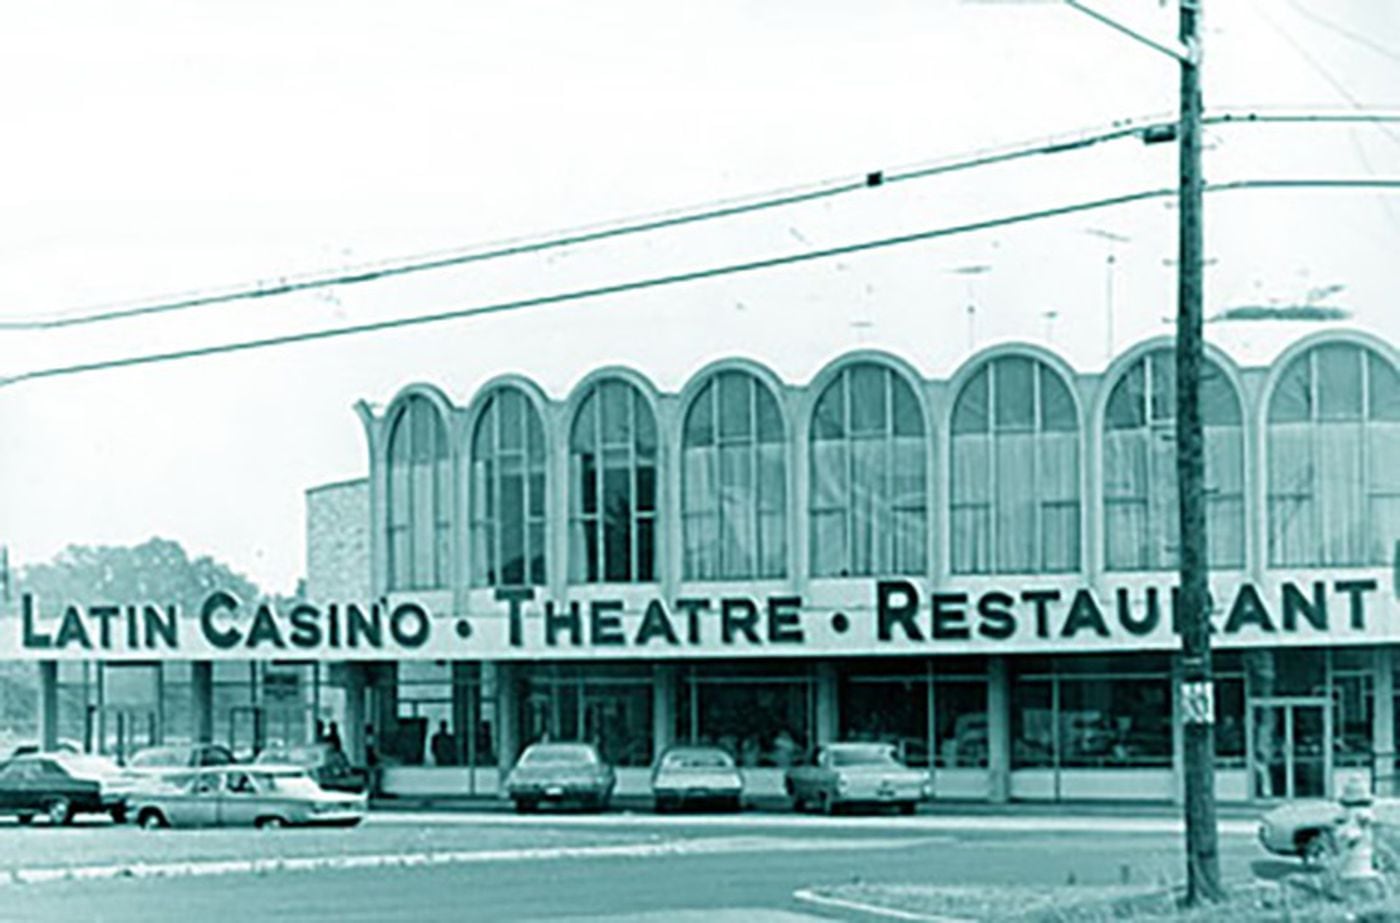 Latin casino theatre